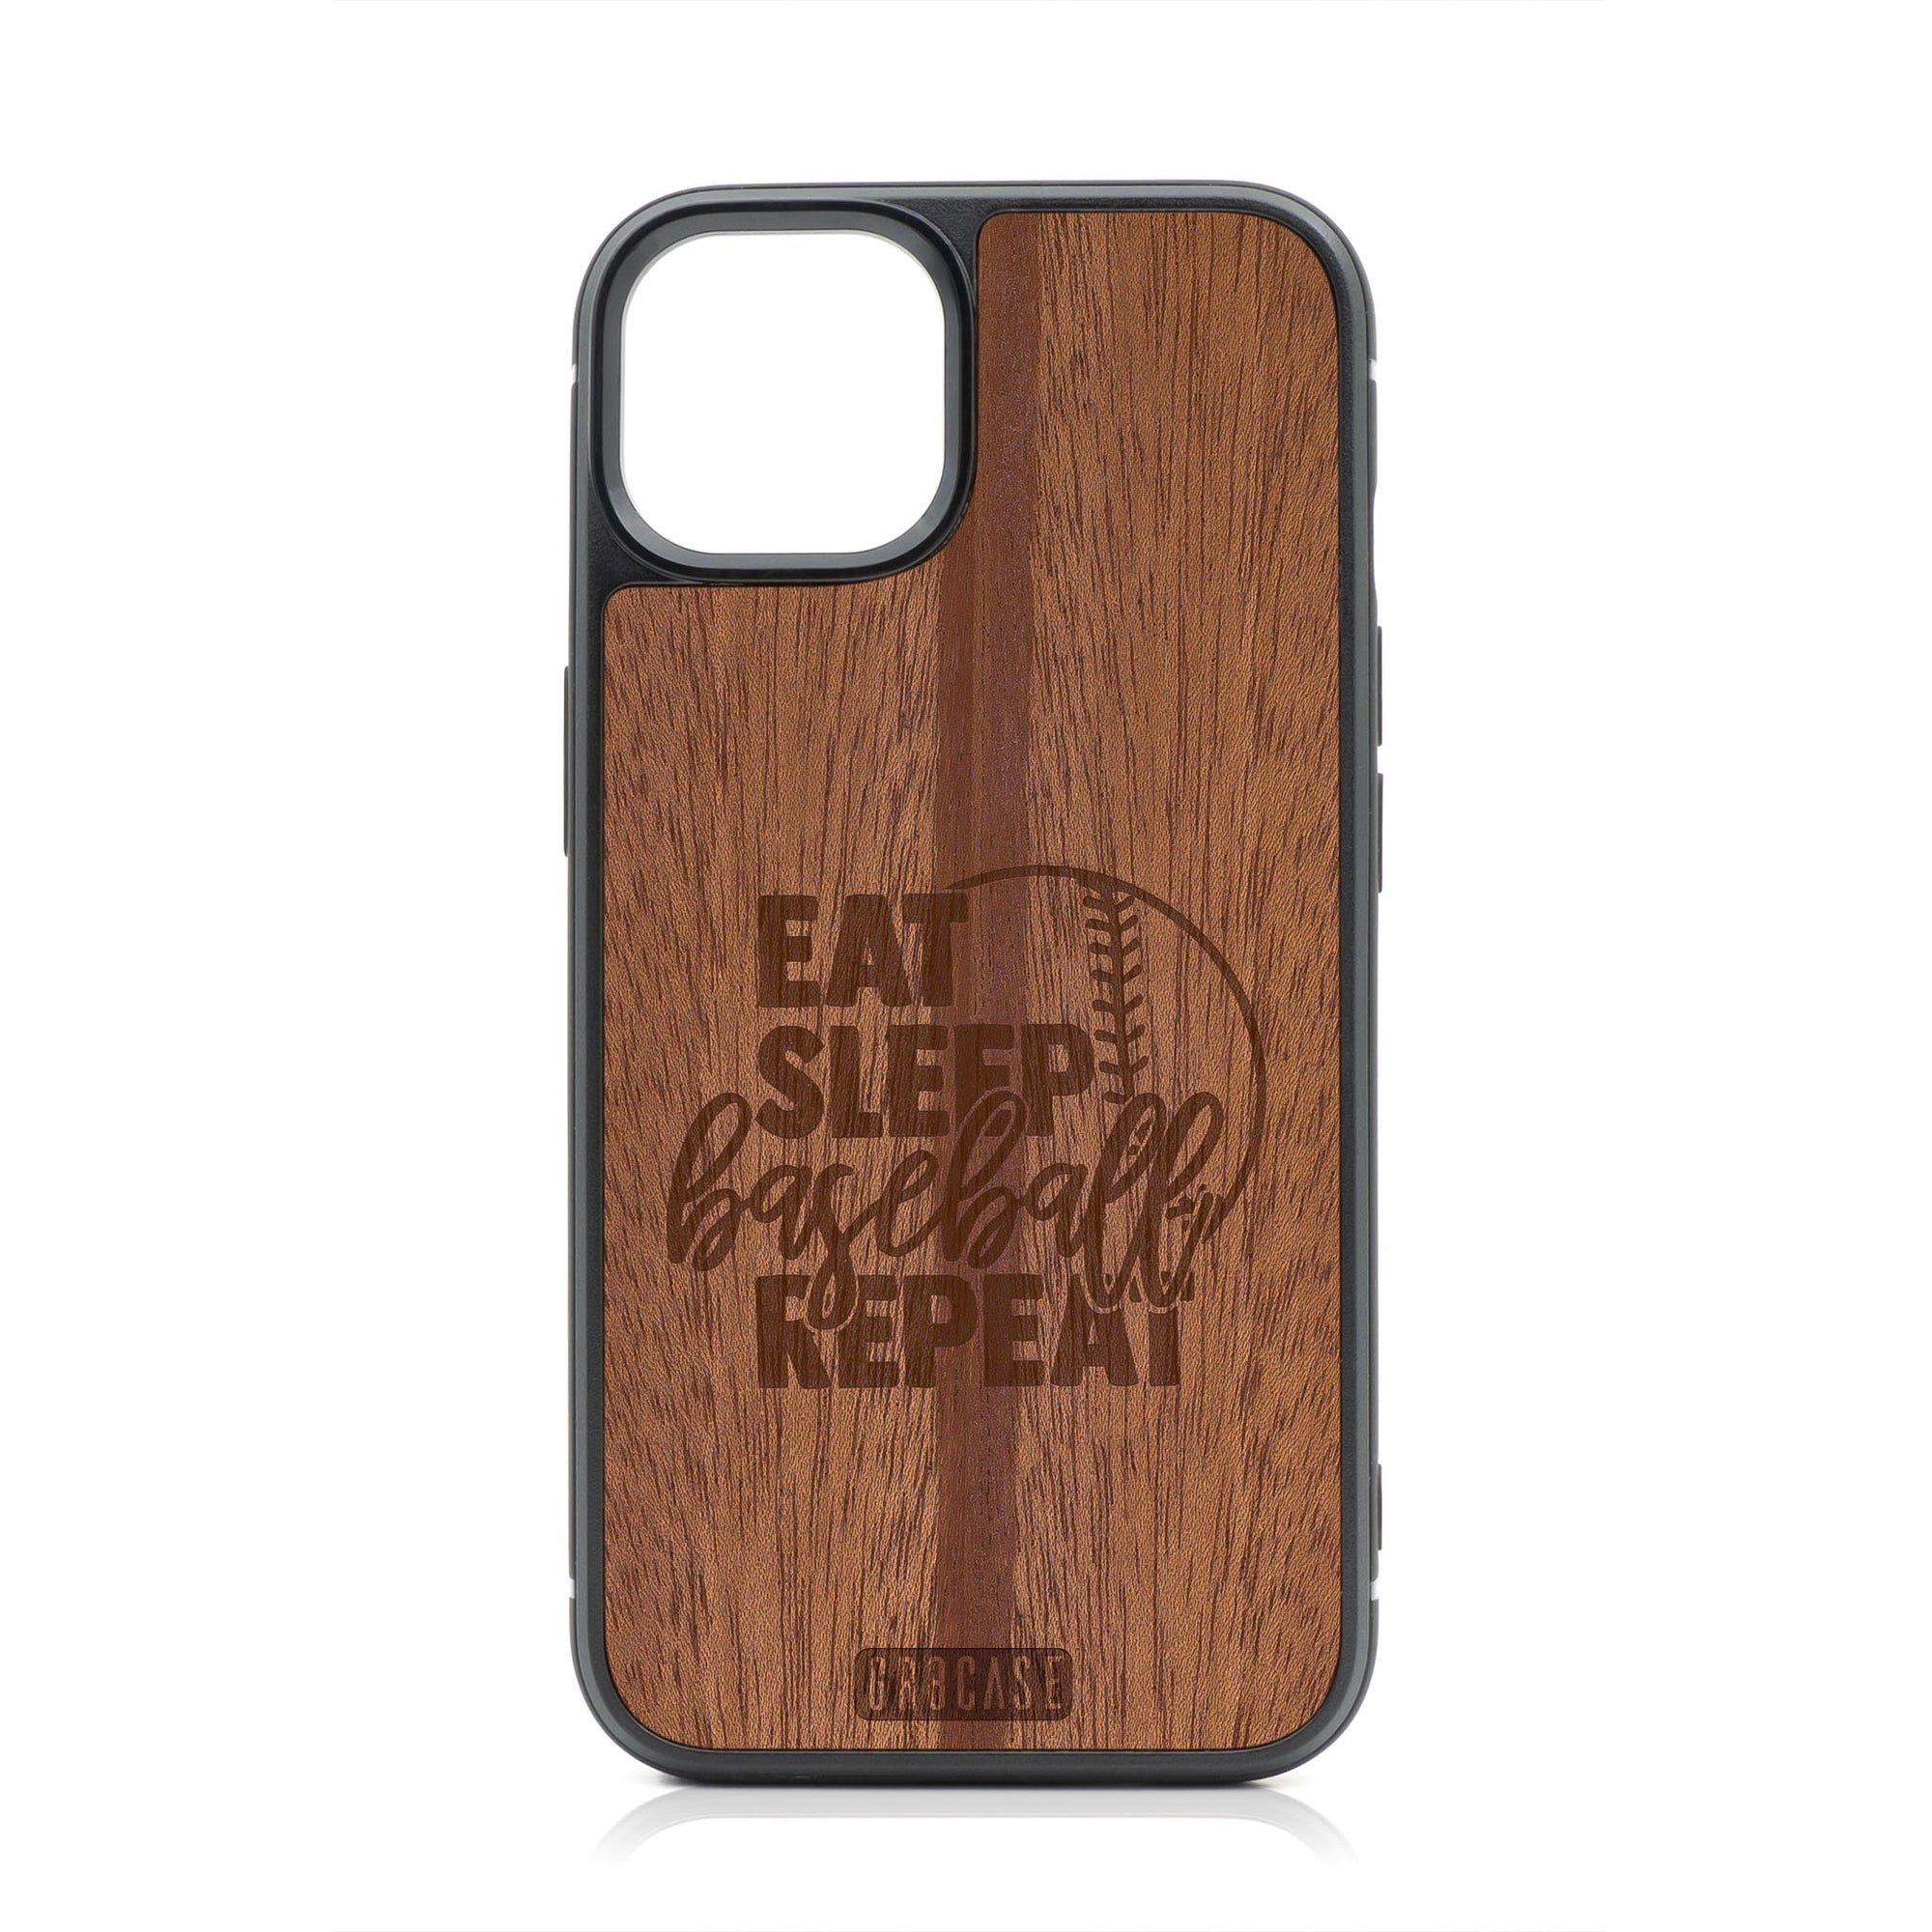 Eat Sleep Baseball Repeat Design Wood Case For iPhone 13